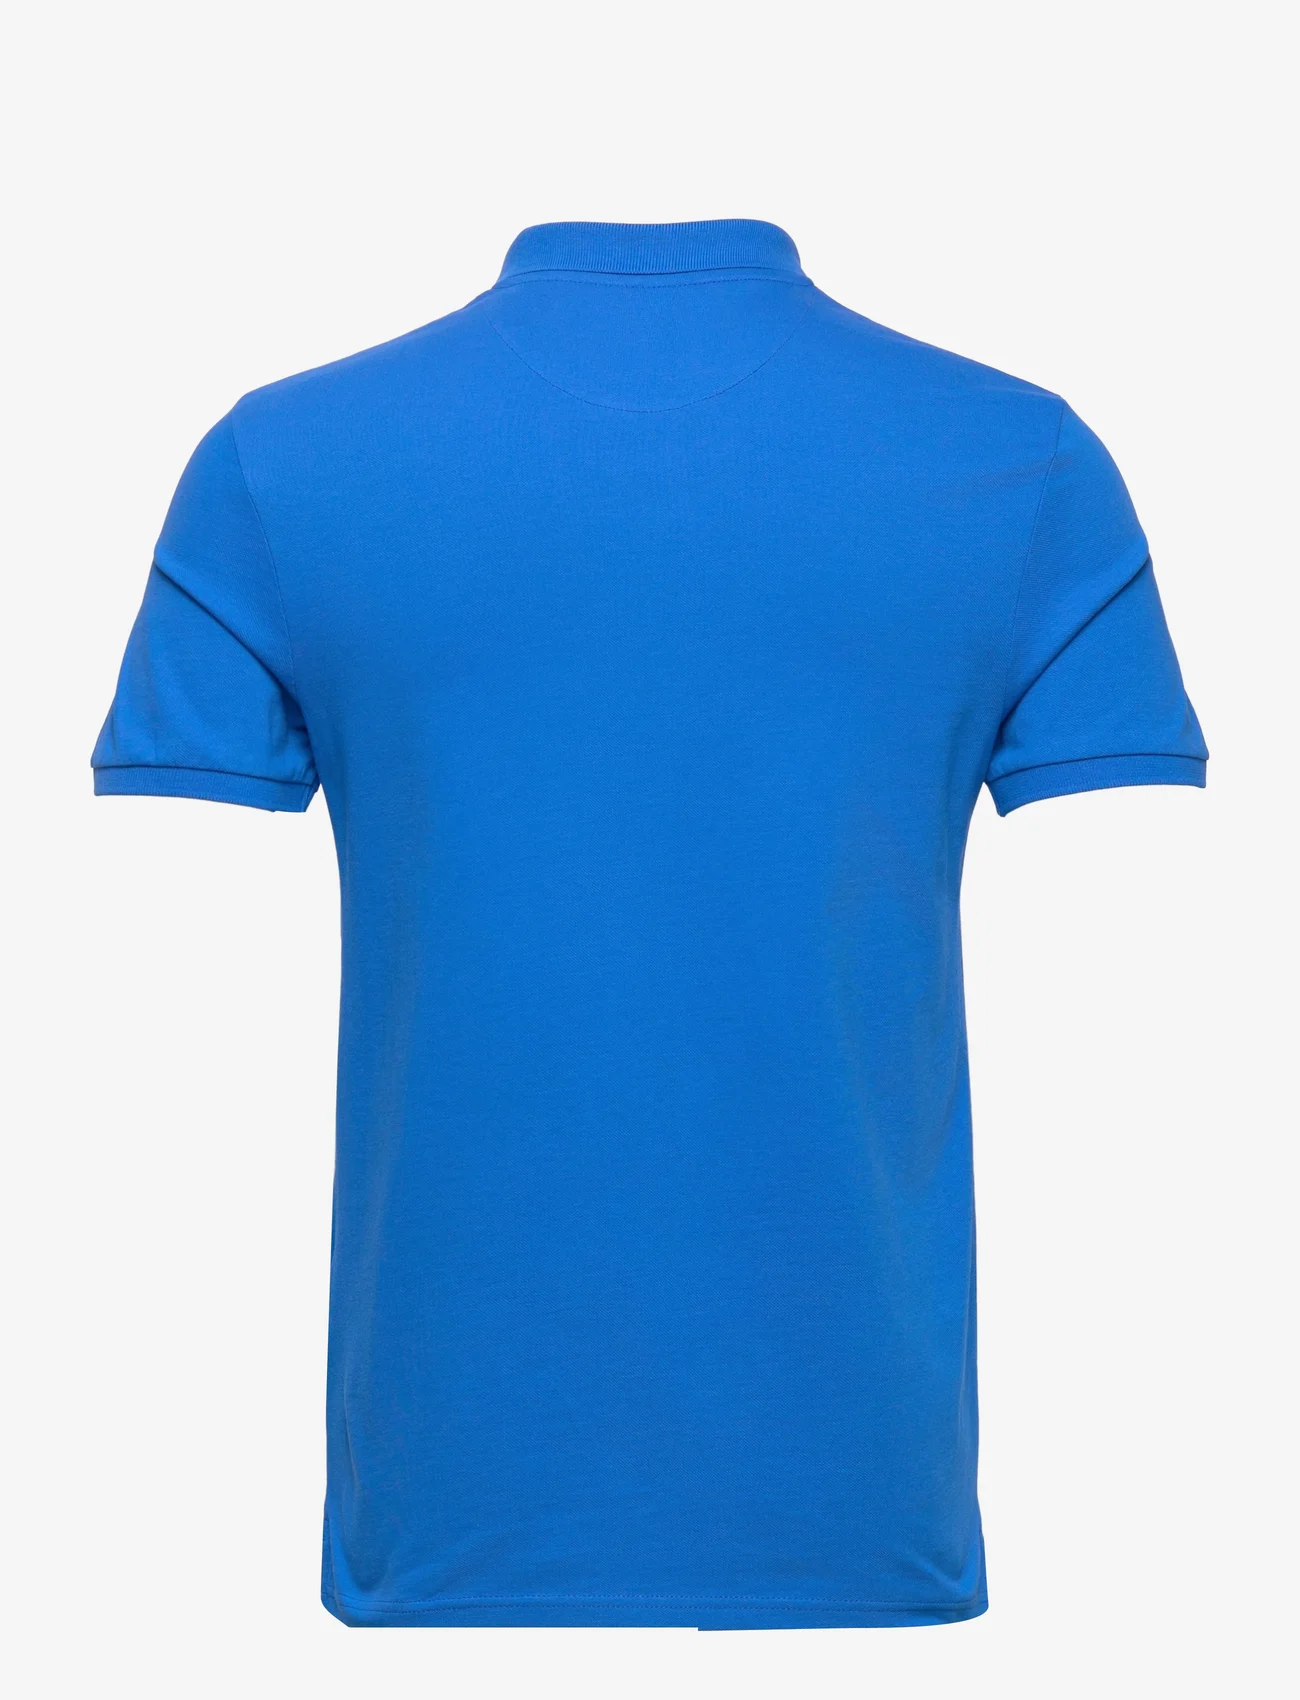 Lyle & Scott - Plain Polo Shirt - korte mouwen - bright blue - 1